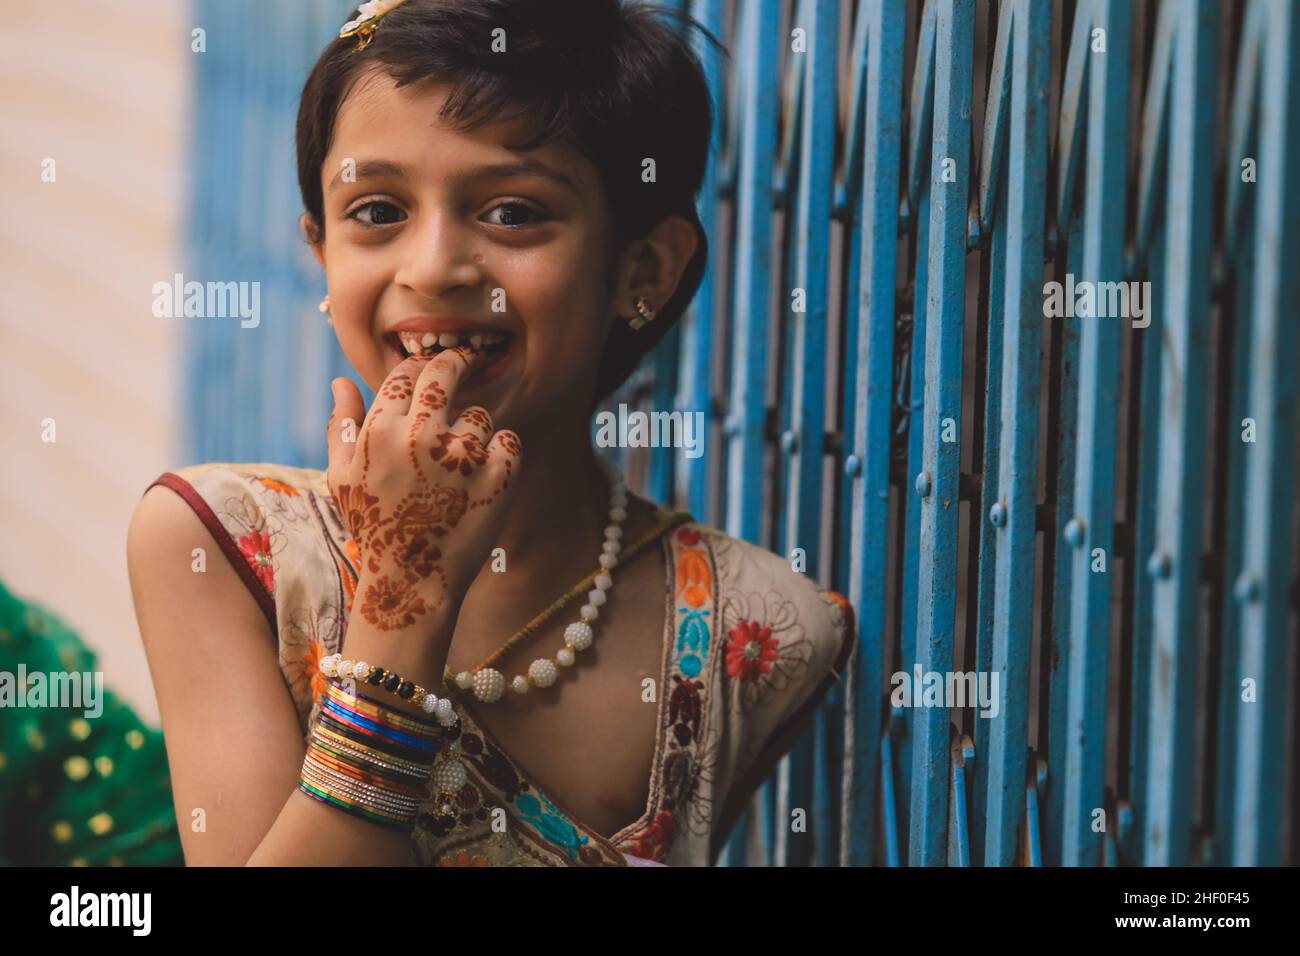 Peshawar, Pakistan - June 08, 2020: Smiling Pakistani Girl with Cut Dark Hair and Colorful Dress Stock Photo